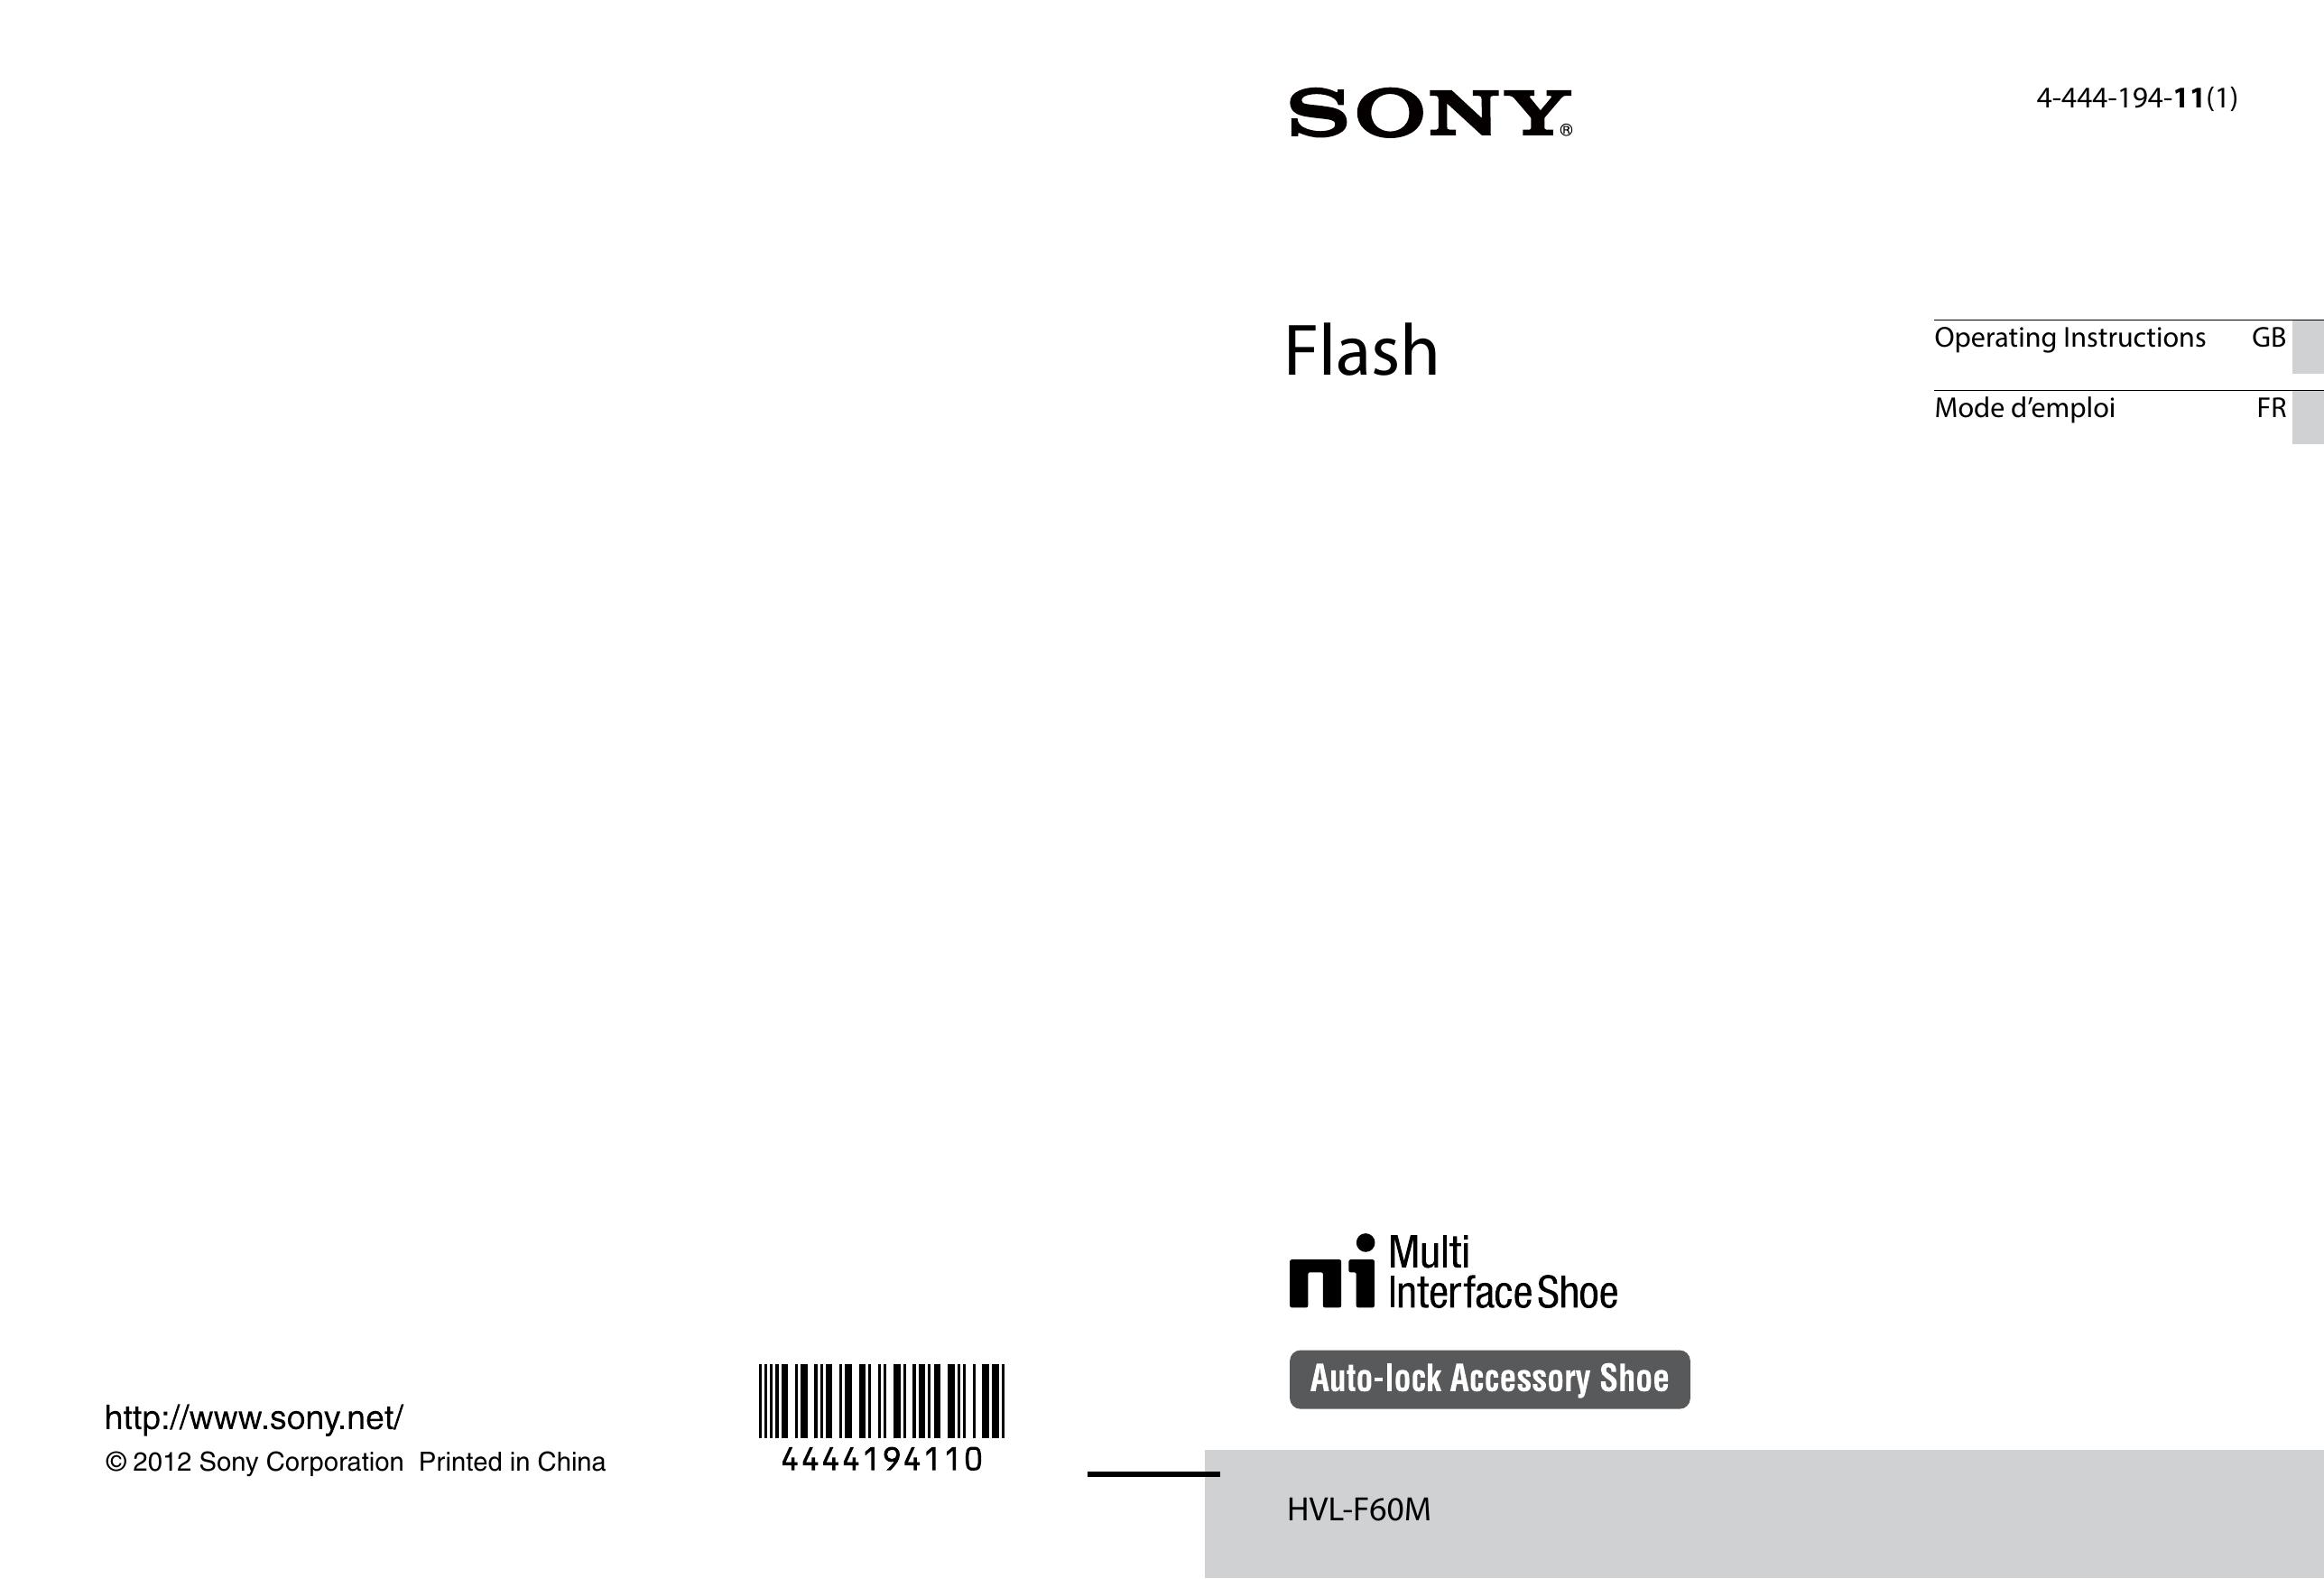 Sony HVLF60M Camera Flash User Manual